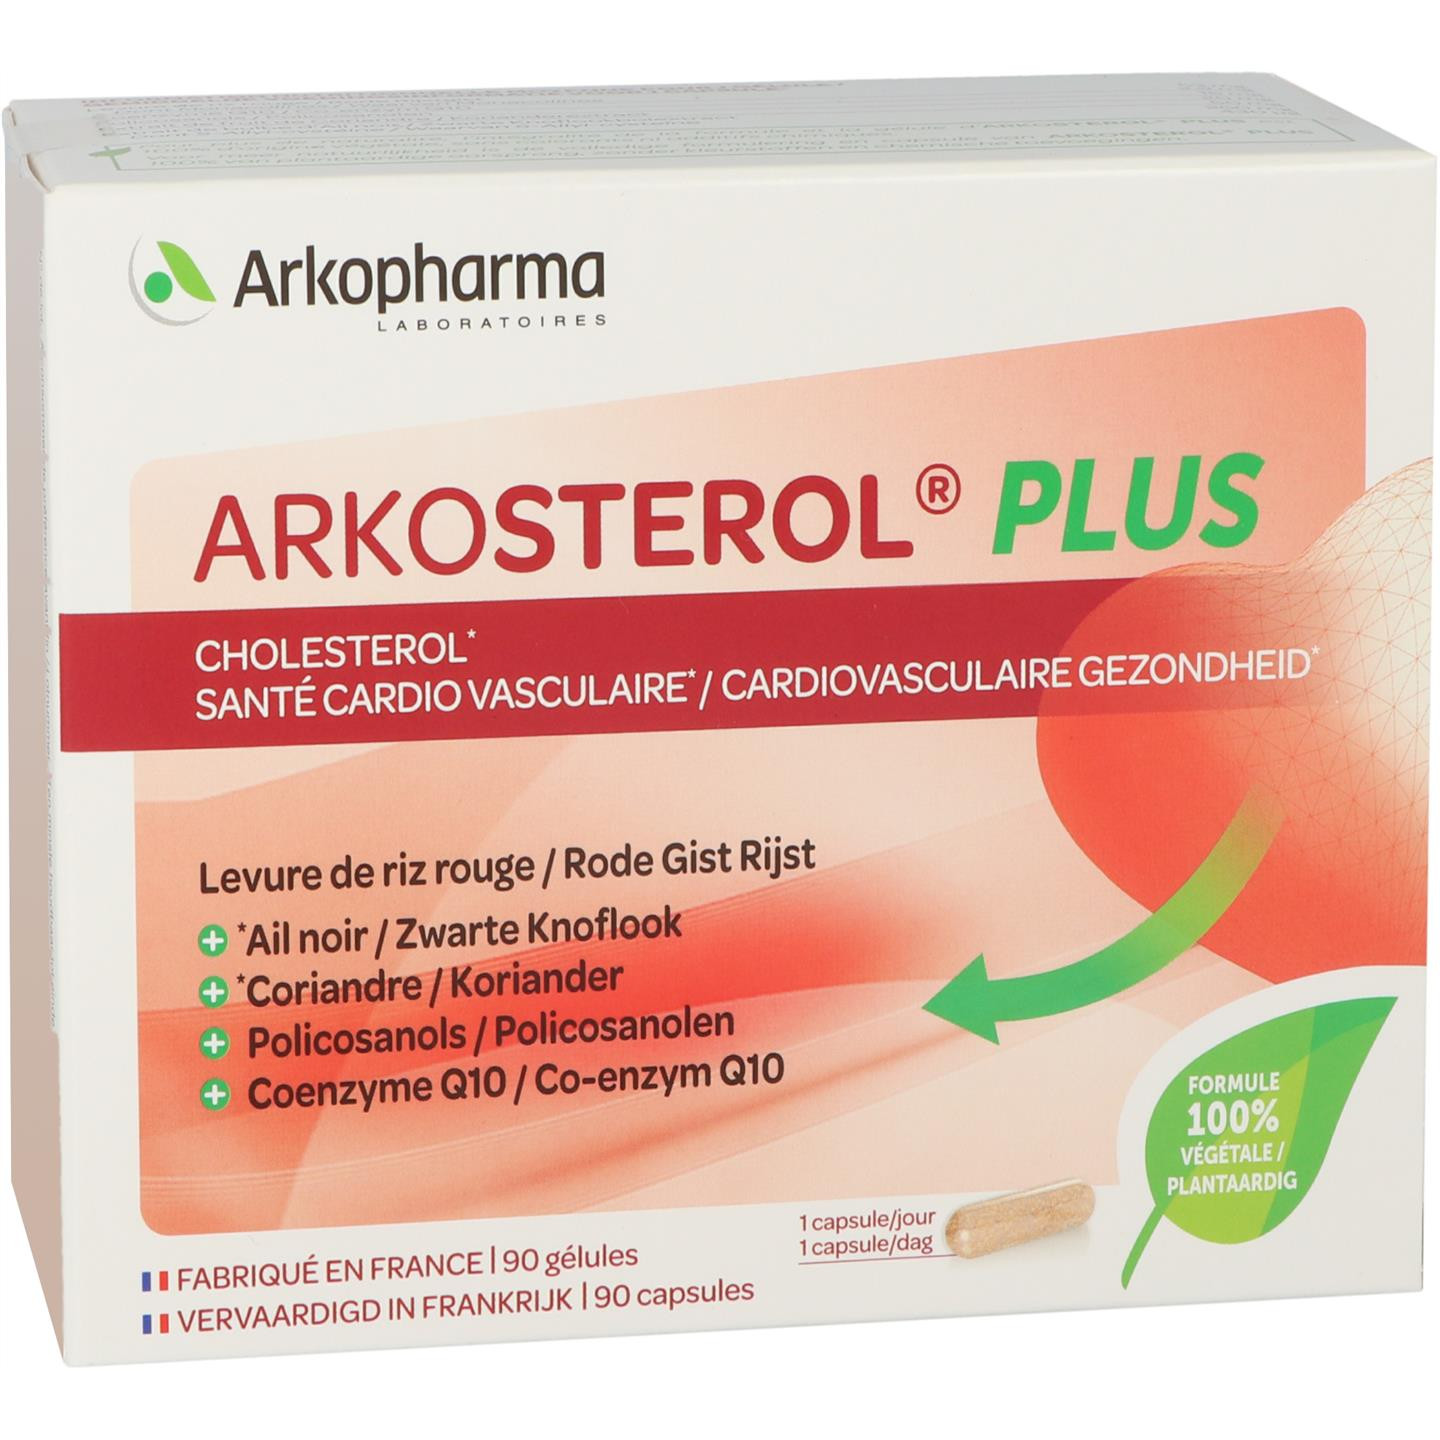 Arkosterol Plus